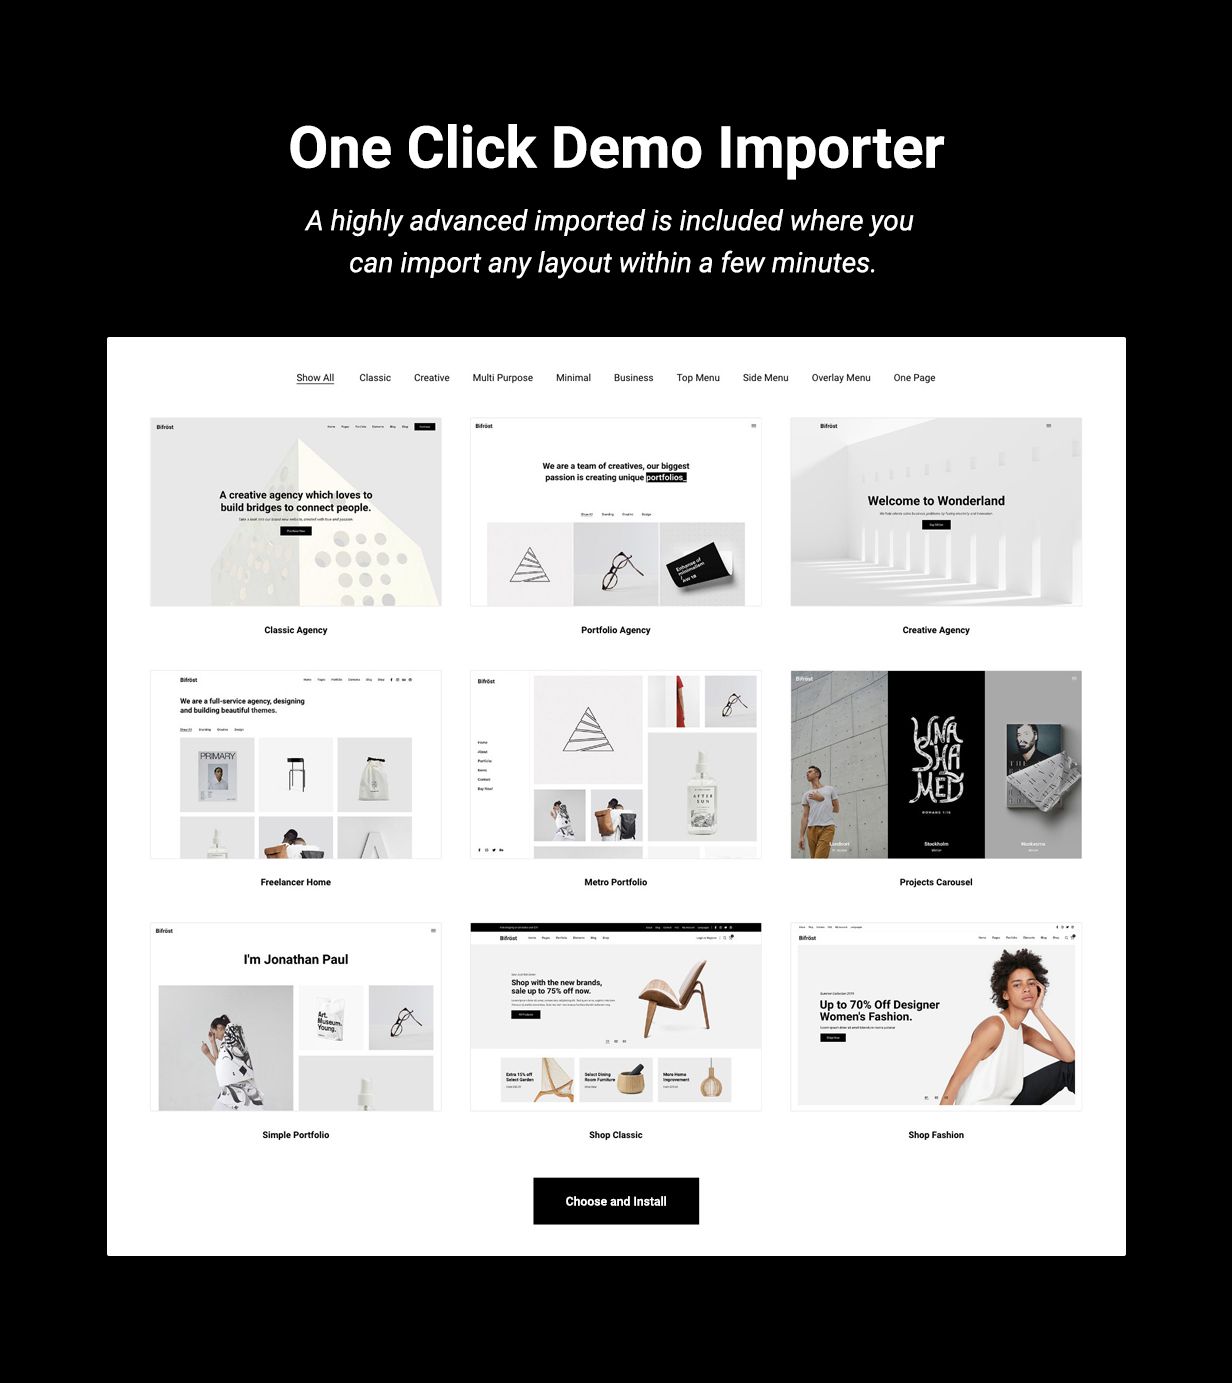 One Click Demo Importer